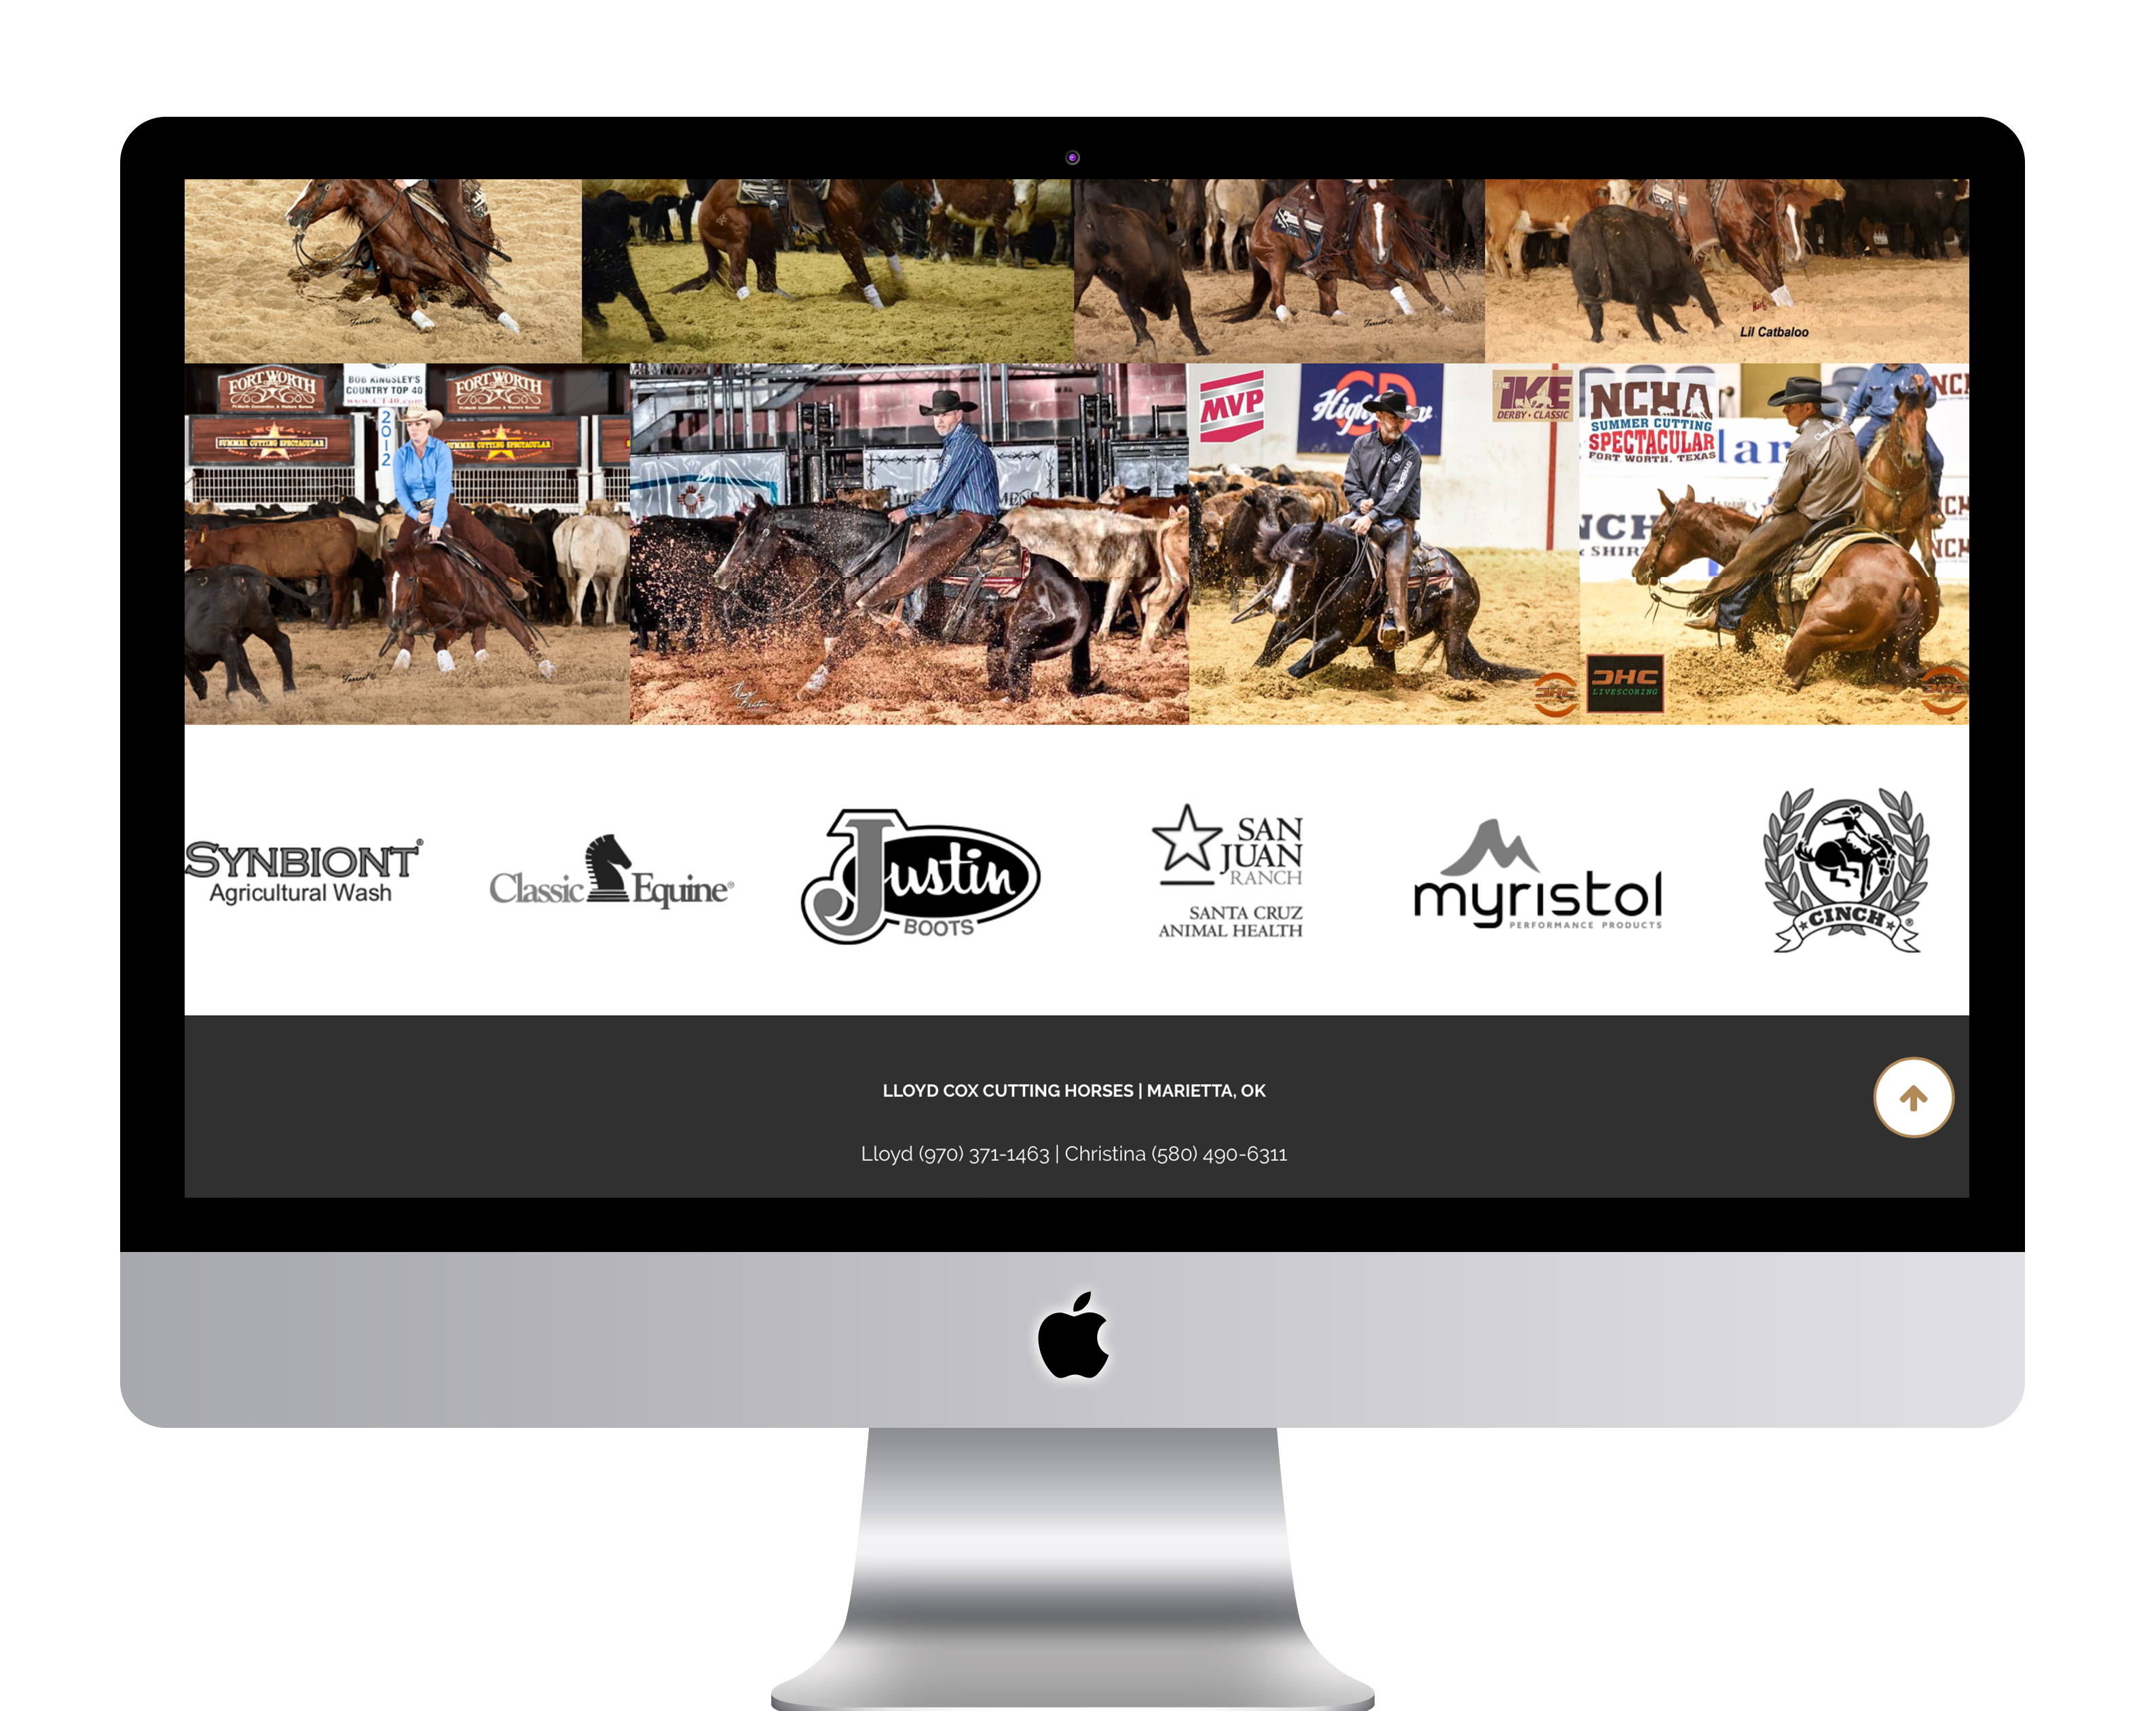 Lloyd Cox Cutting Horses website design